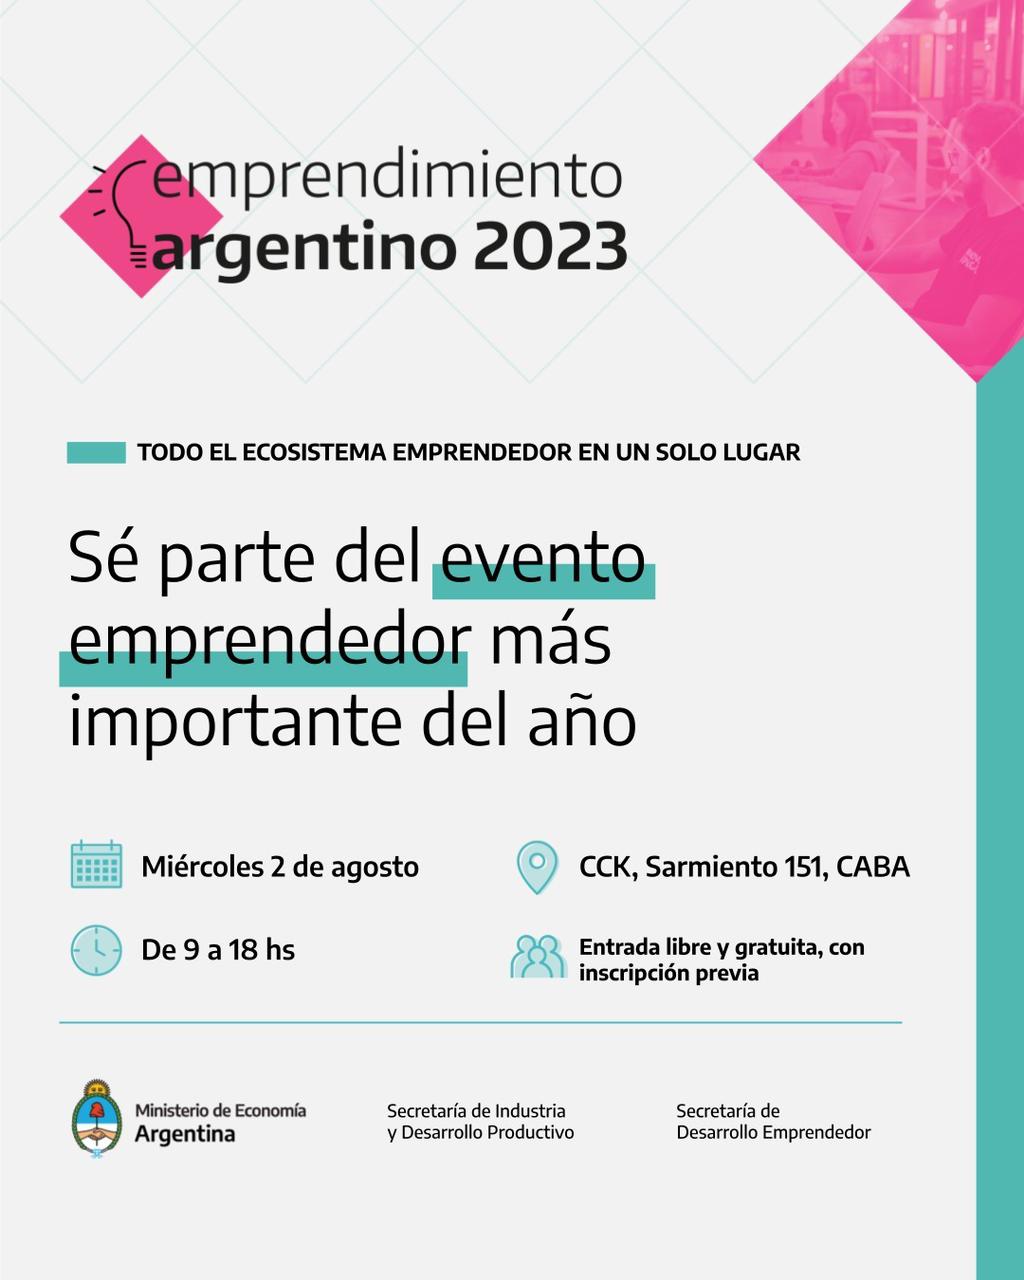 Emprendimiento Argentino 2023